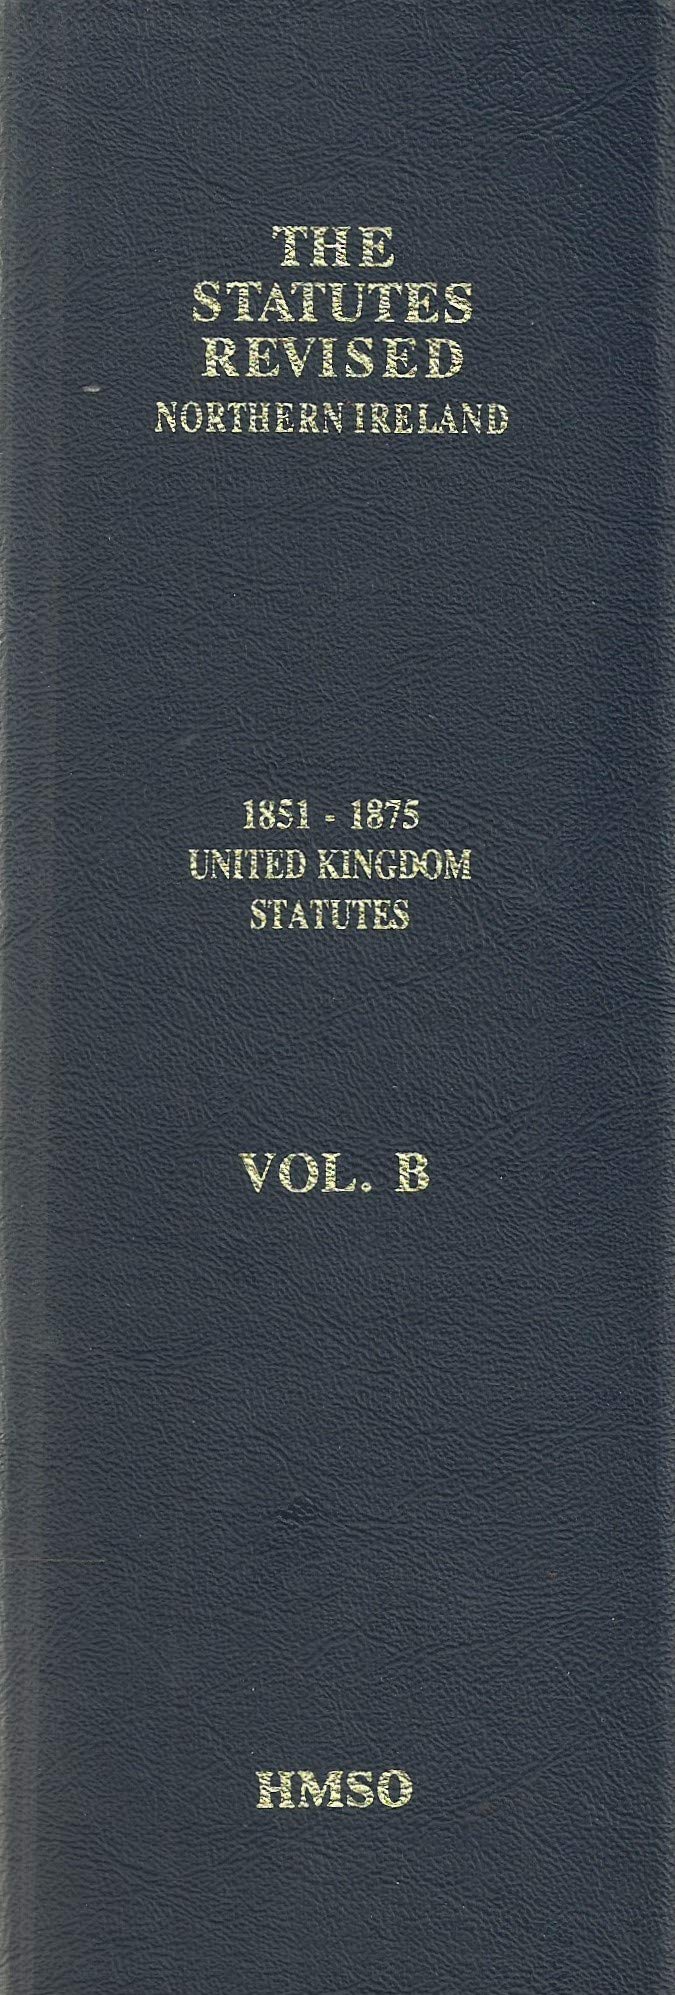 The Statutes Revised - Northern Ireland: 1851-1875 United Kingdom Statutes Volume B